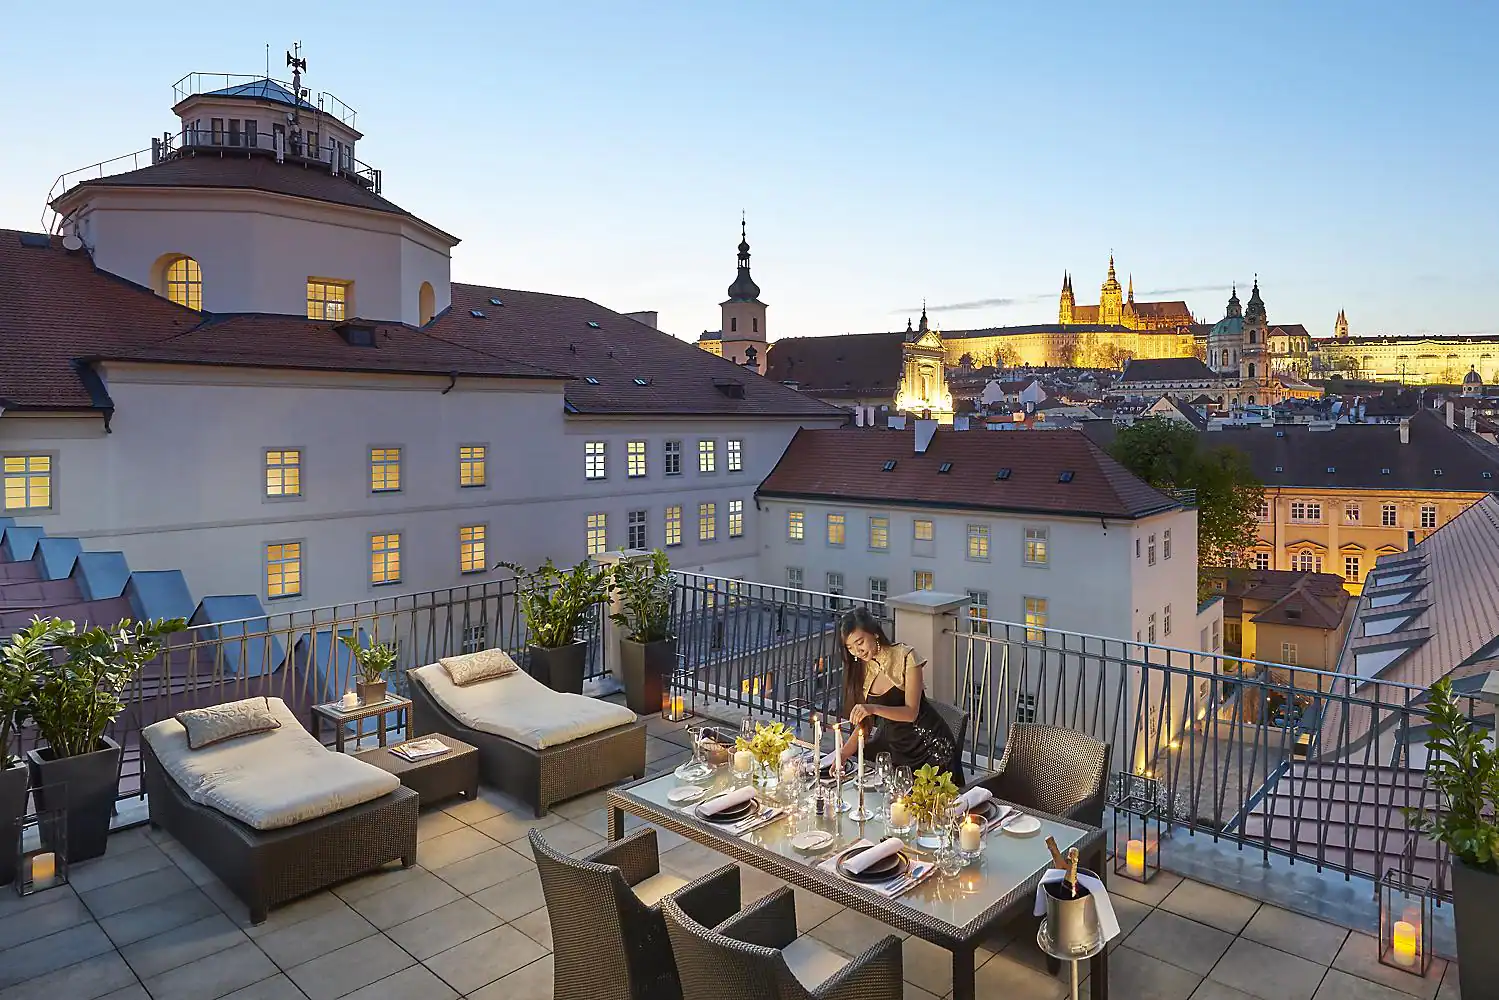 The Mandarin Oriental, one of the best luxury hotels in Prague